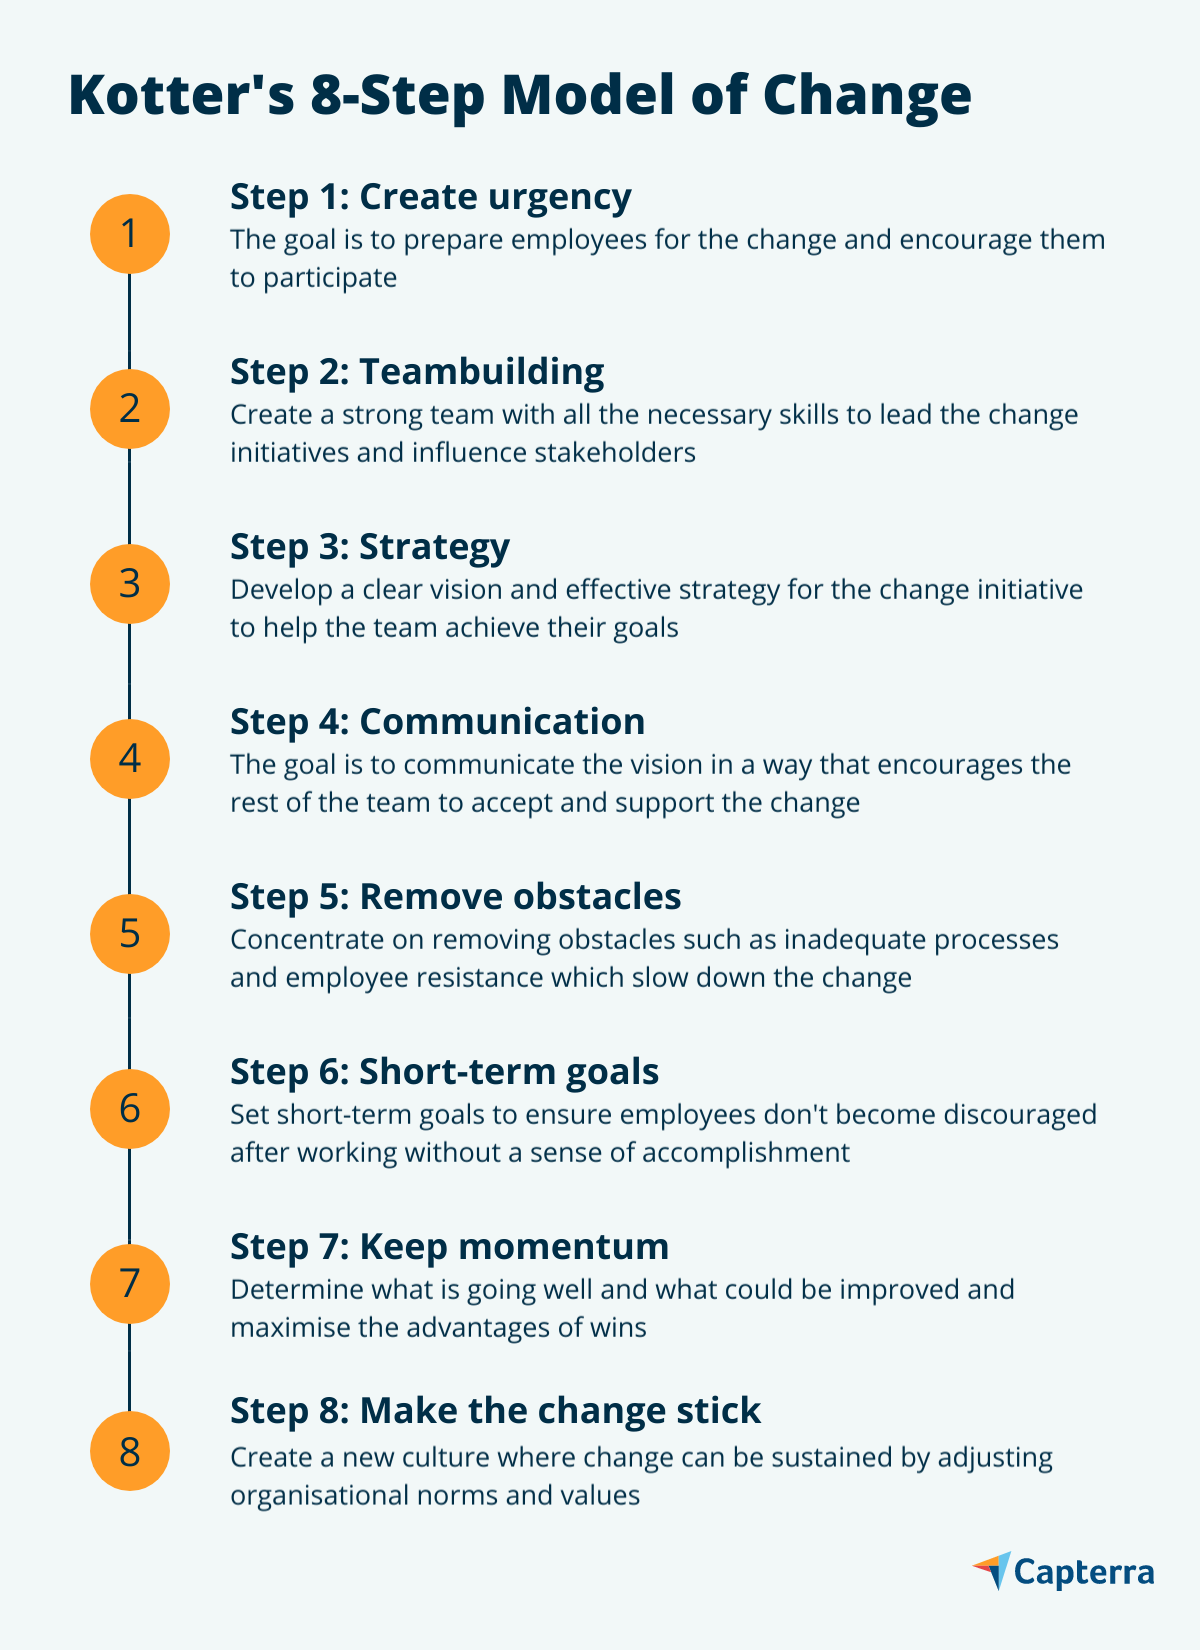 Kotter's 8-Step Model of Change